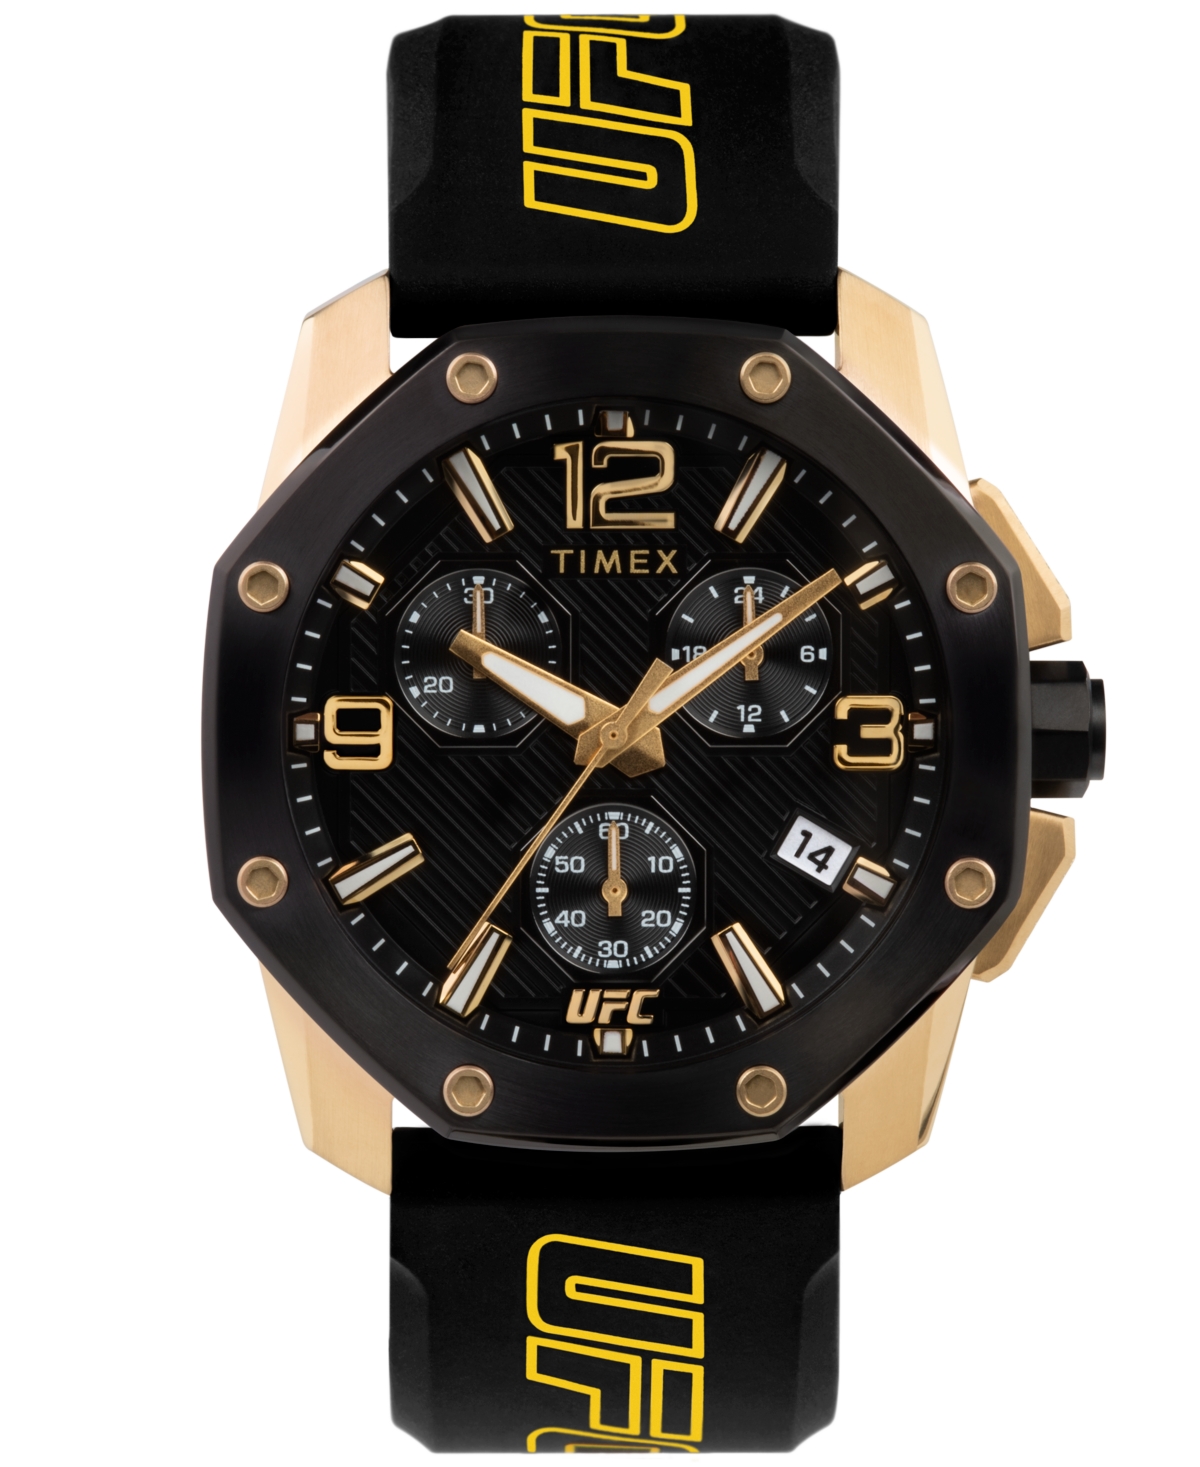 Ufc Men's Quartz Icon Silicone Black Watch, 45mm - Black